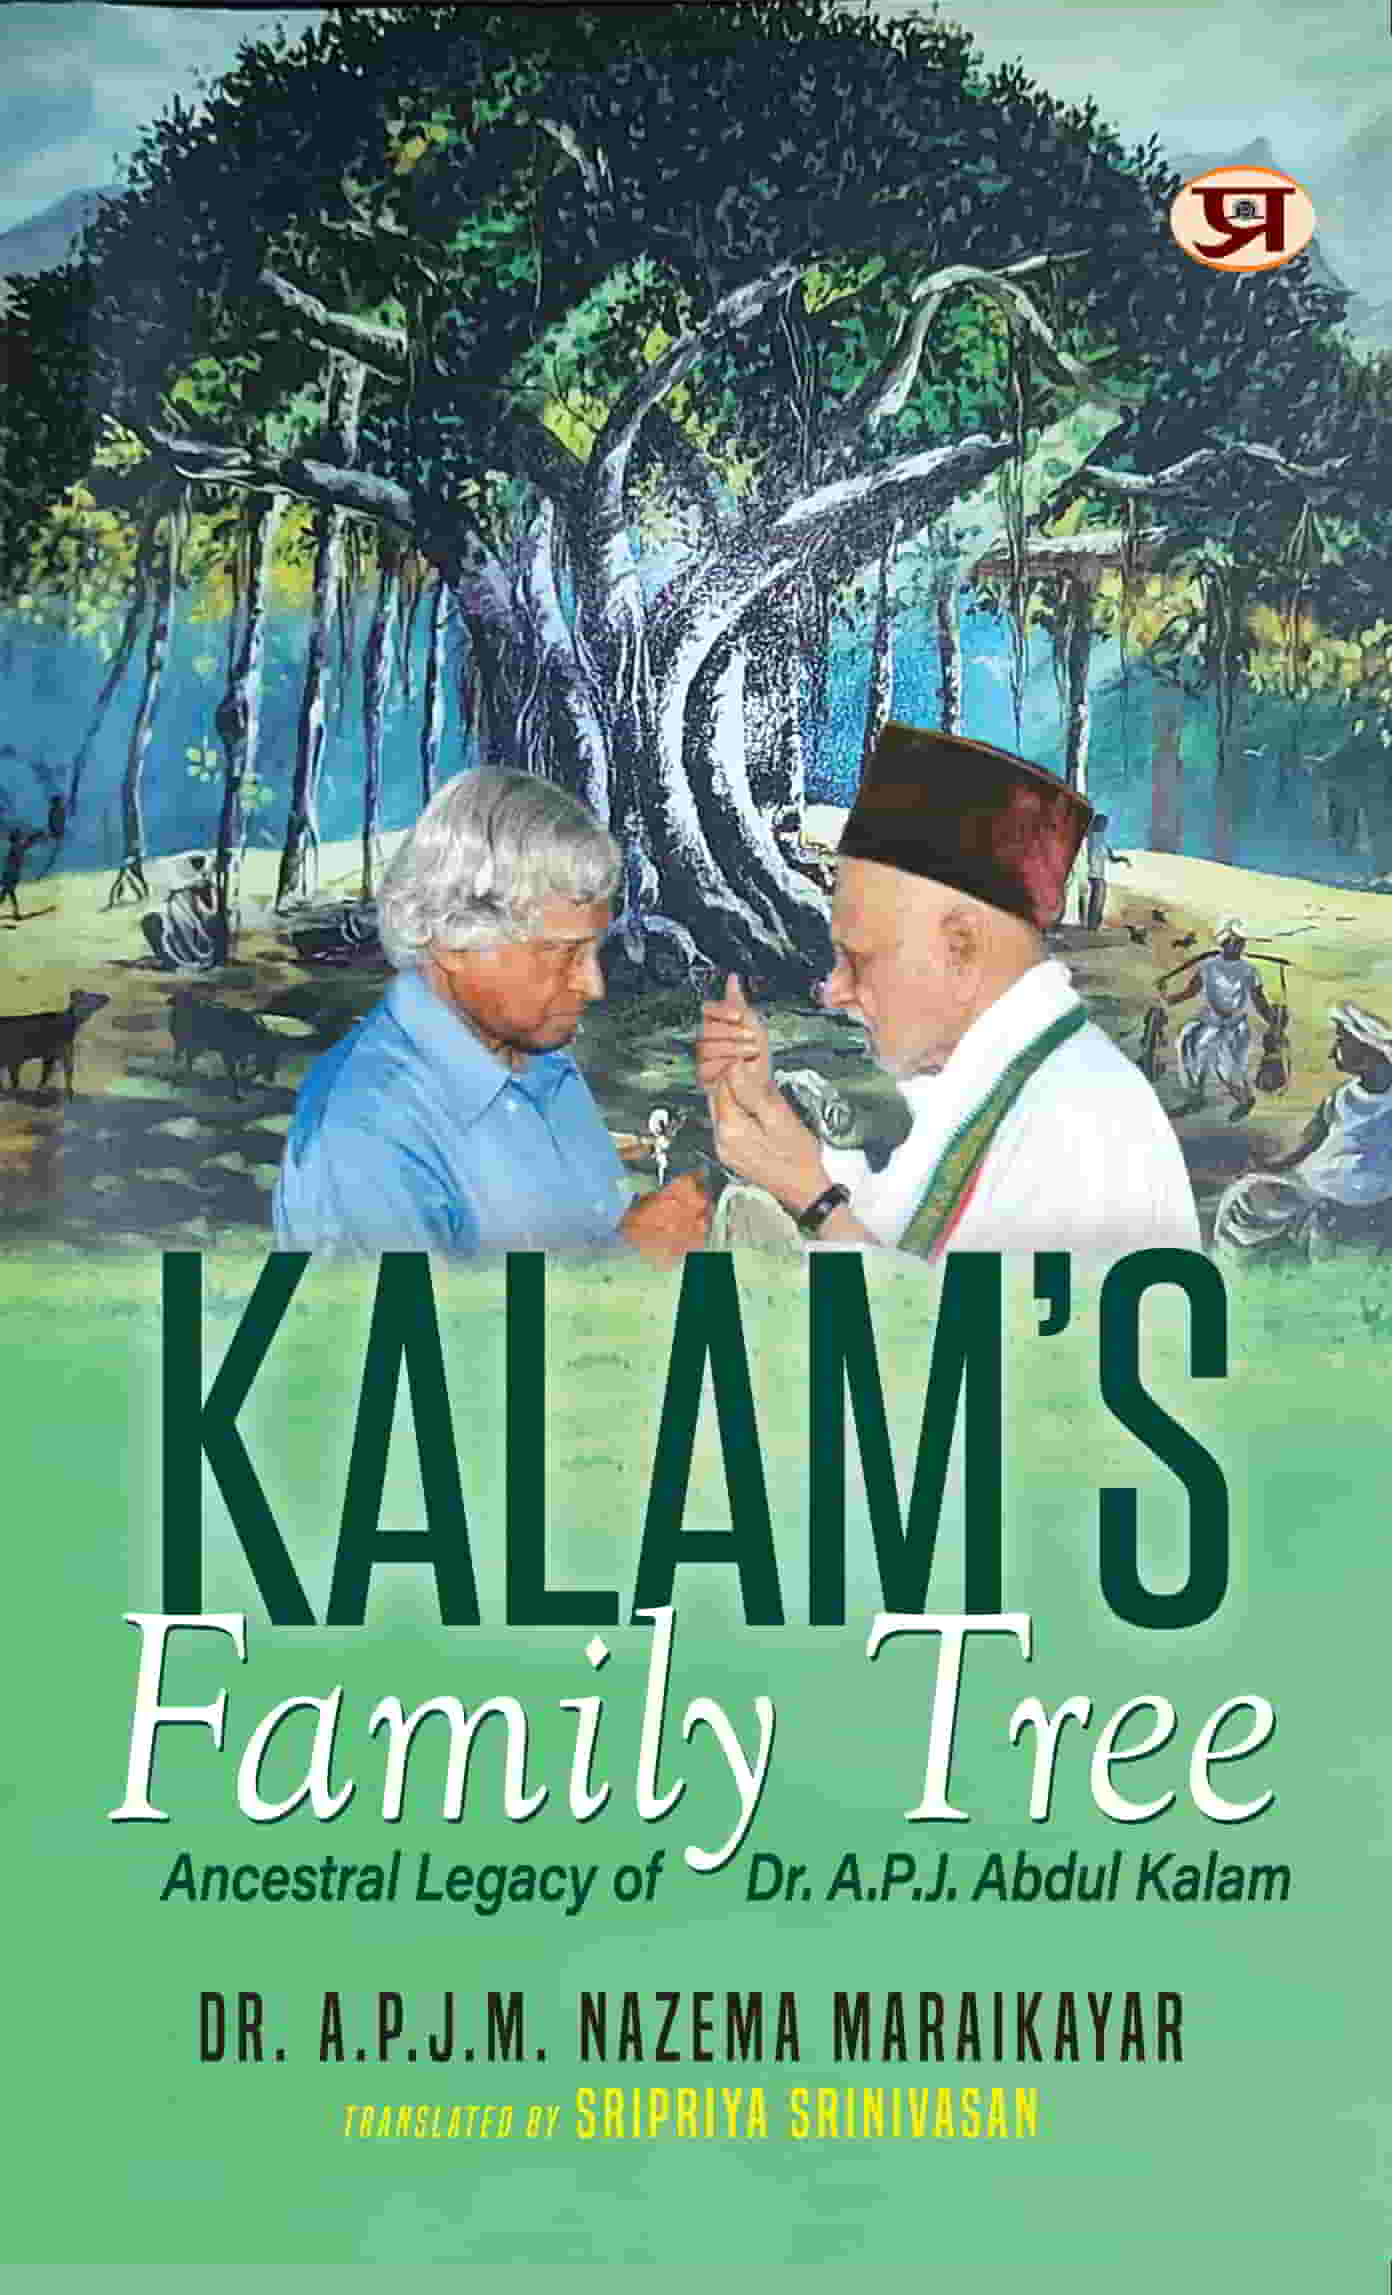 Kalam's Family Tree: Ancestral Legacy of Dr. A.P.J. Abdul Kalam